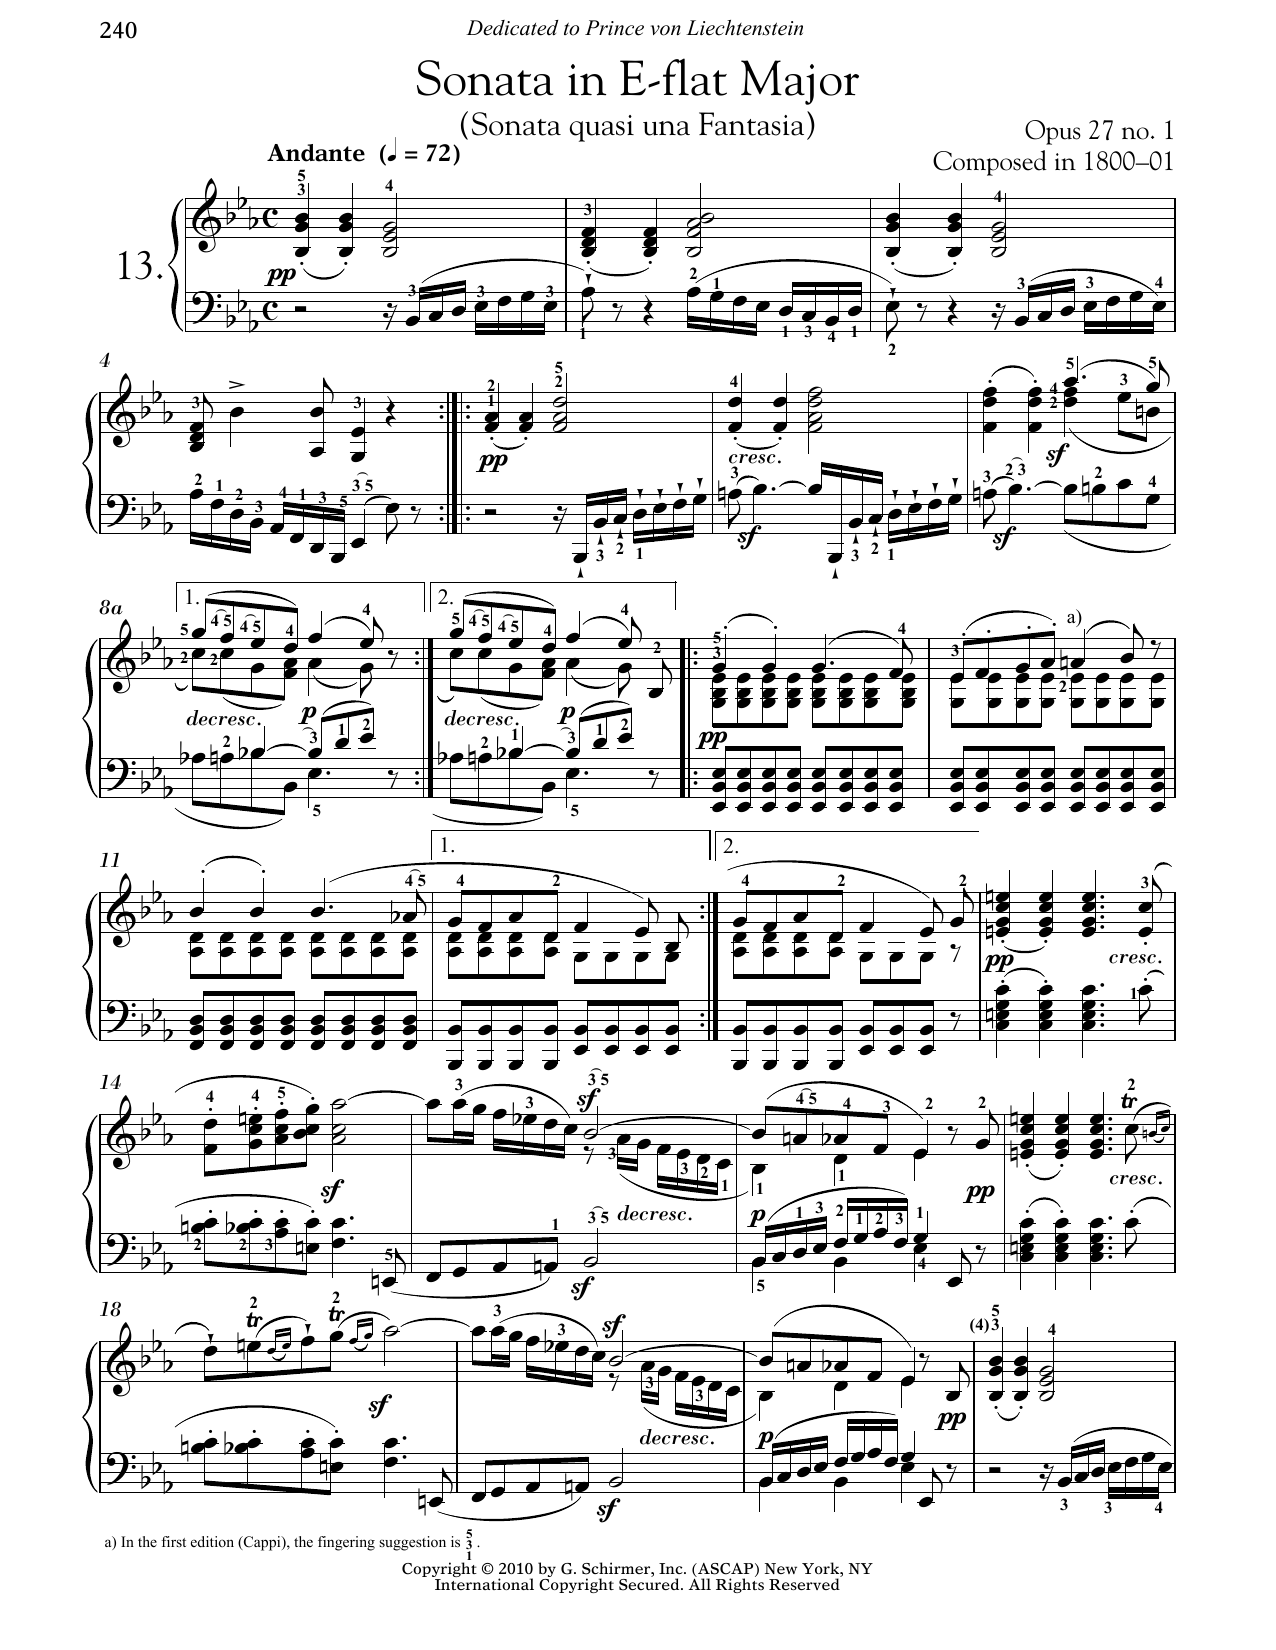 Ludwig van Beethoven Piano Sonata No. 13 In E-flat Major, Op. 27, No. 1 Sheet Music Notes & Chords for Piano - Download or Print PDF